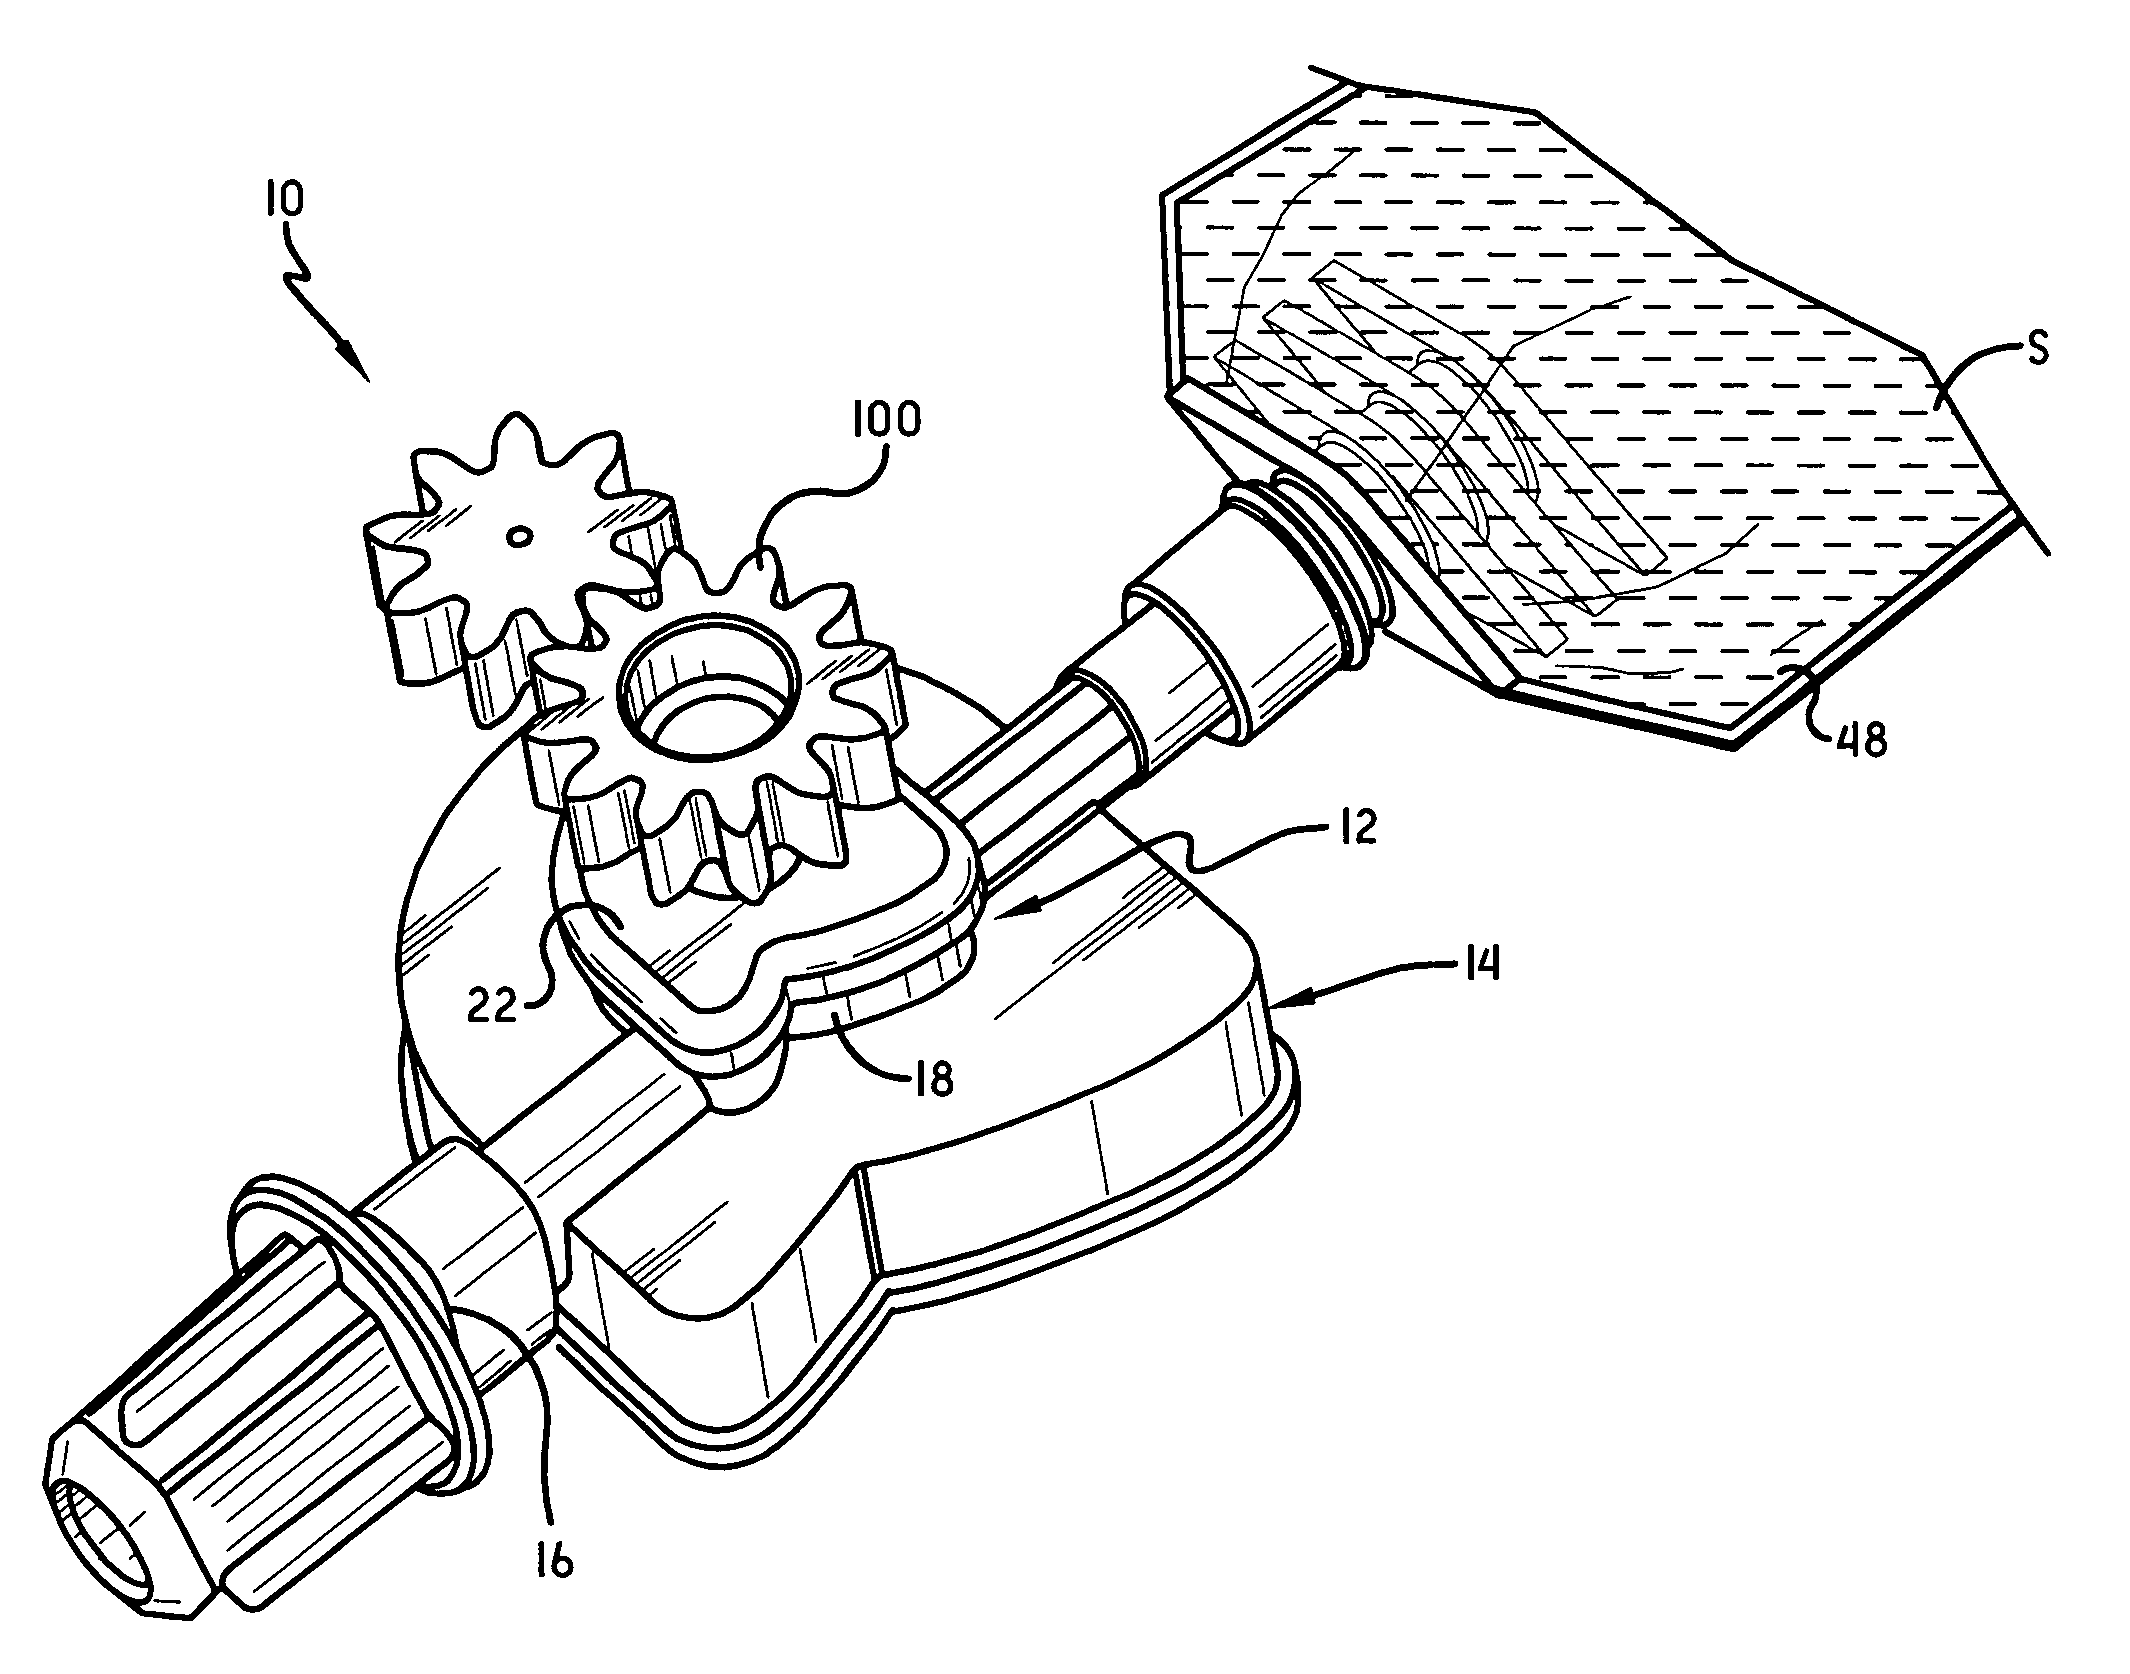 Flexible impeller pumps for mixing individual components